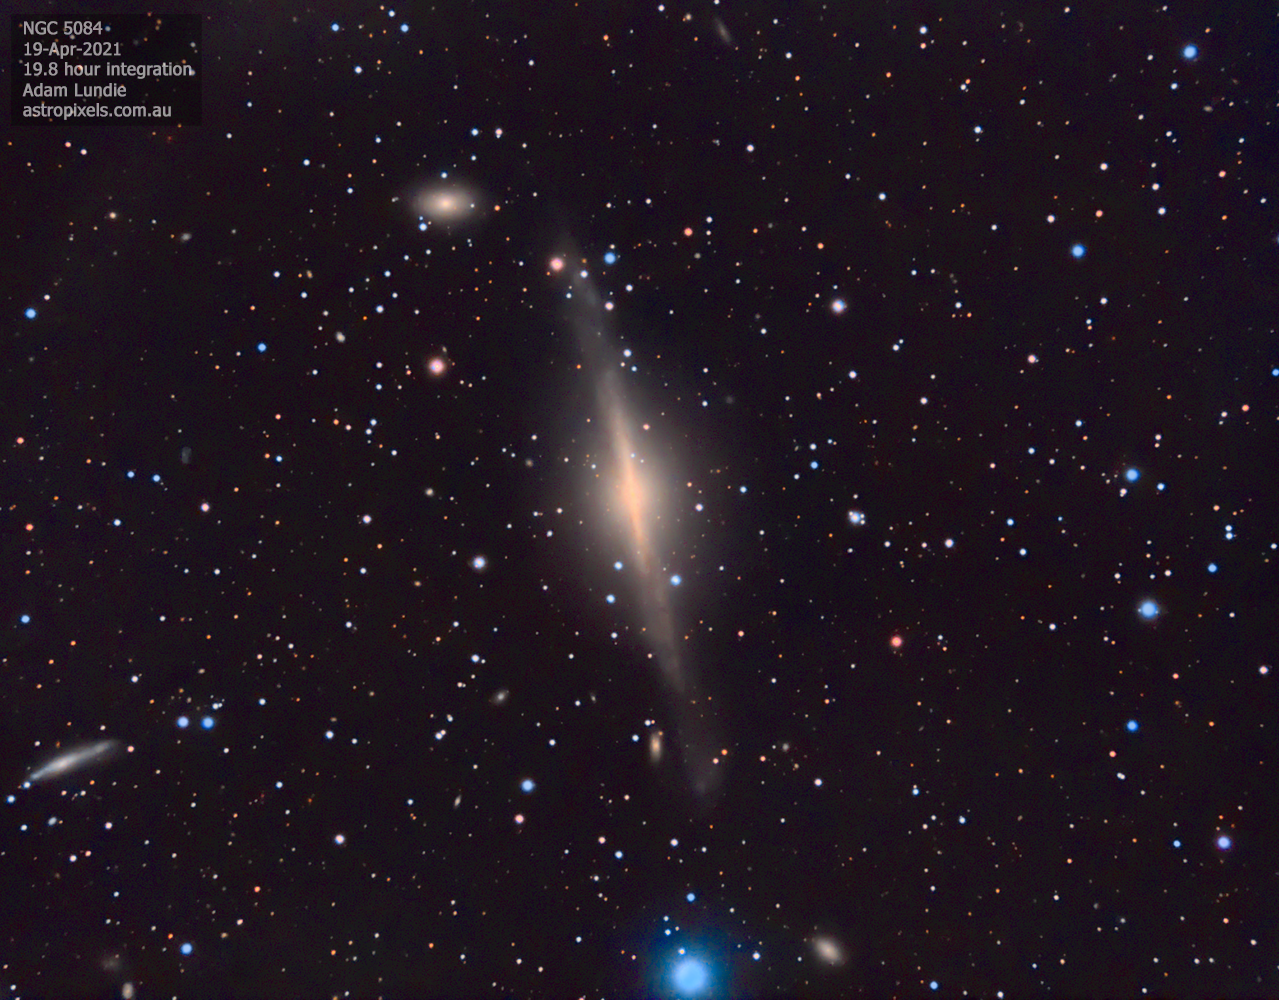 Spiral Galaxy NGC 5084